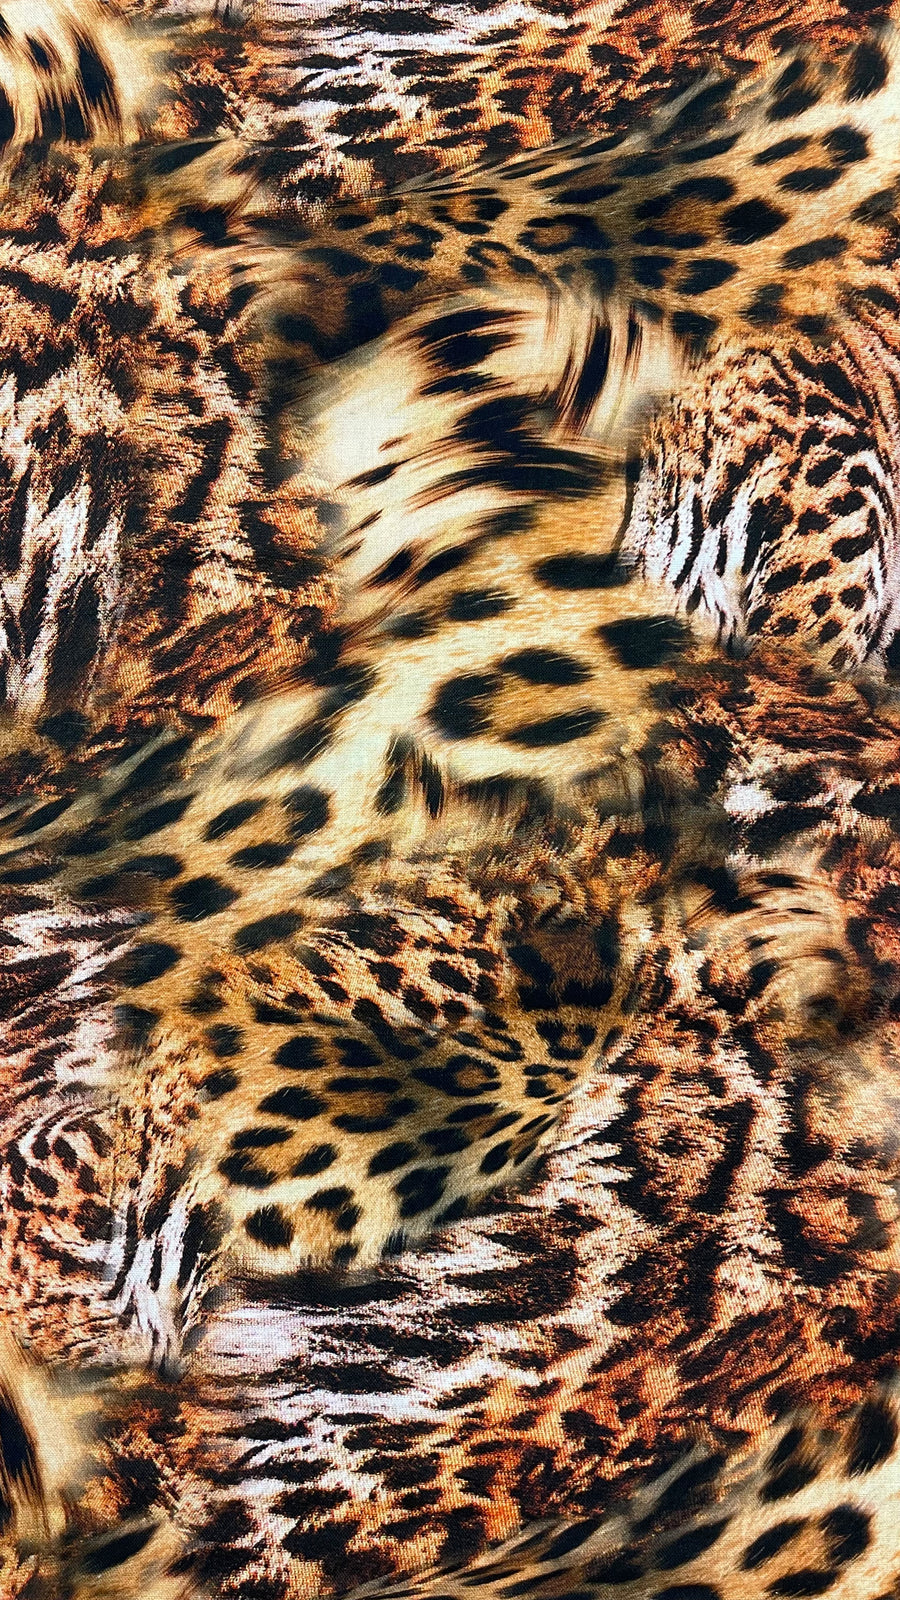 Leopard Skin Print